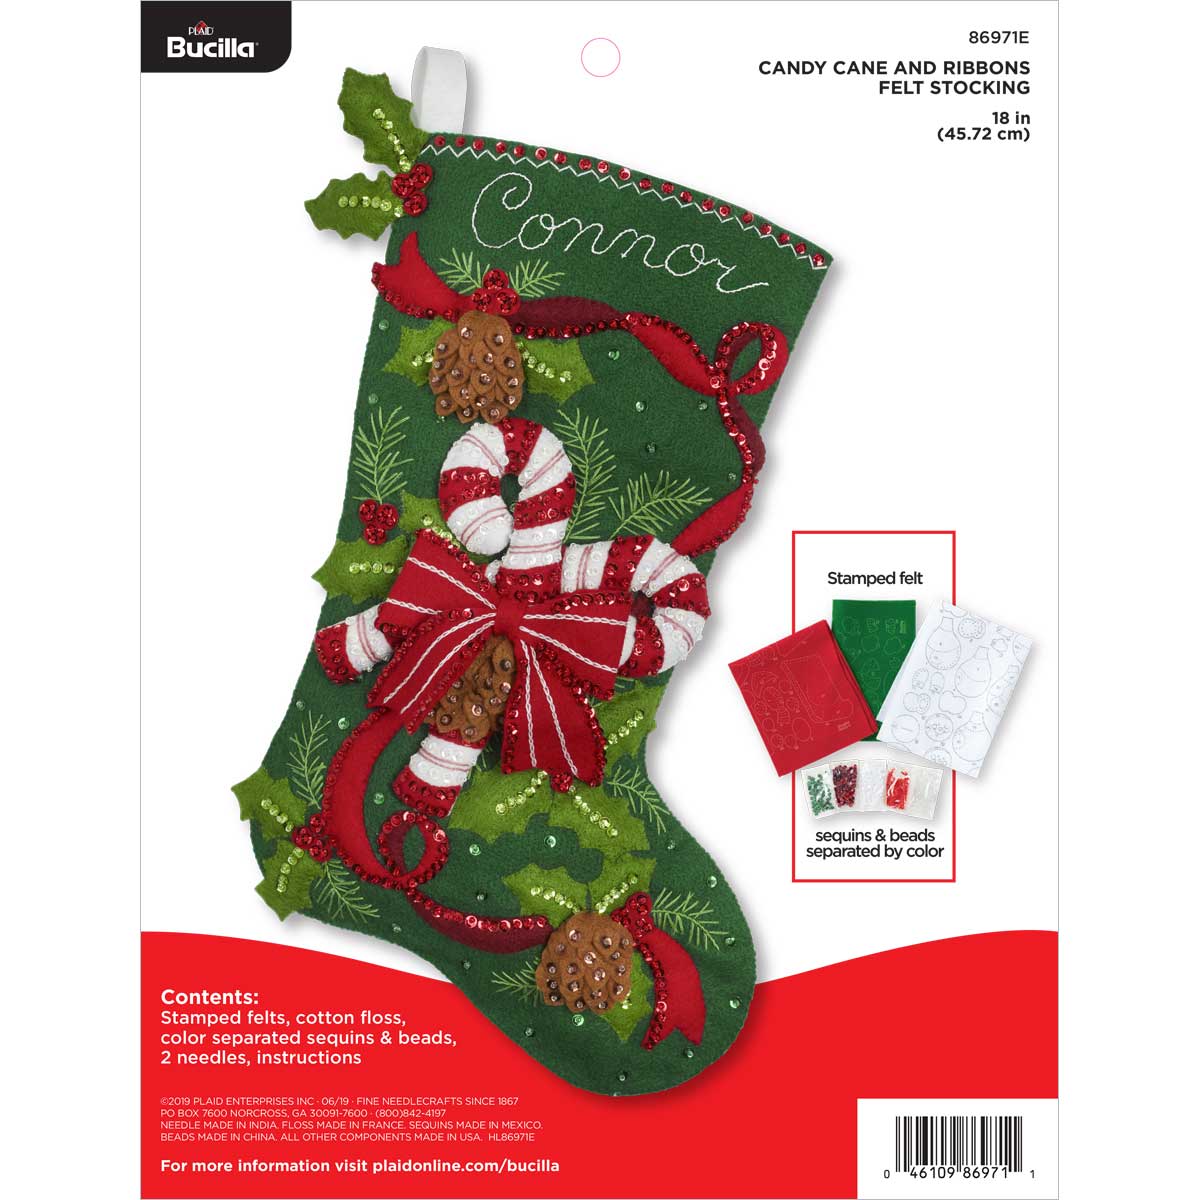 Bucilla ® Seasonal - Felt - Stocking Kits - Candy Cane and Ribbons - 86971E